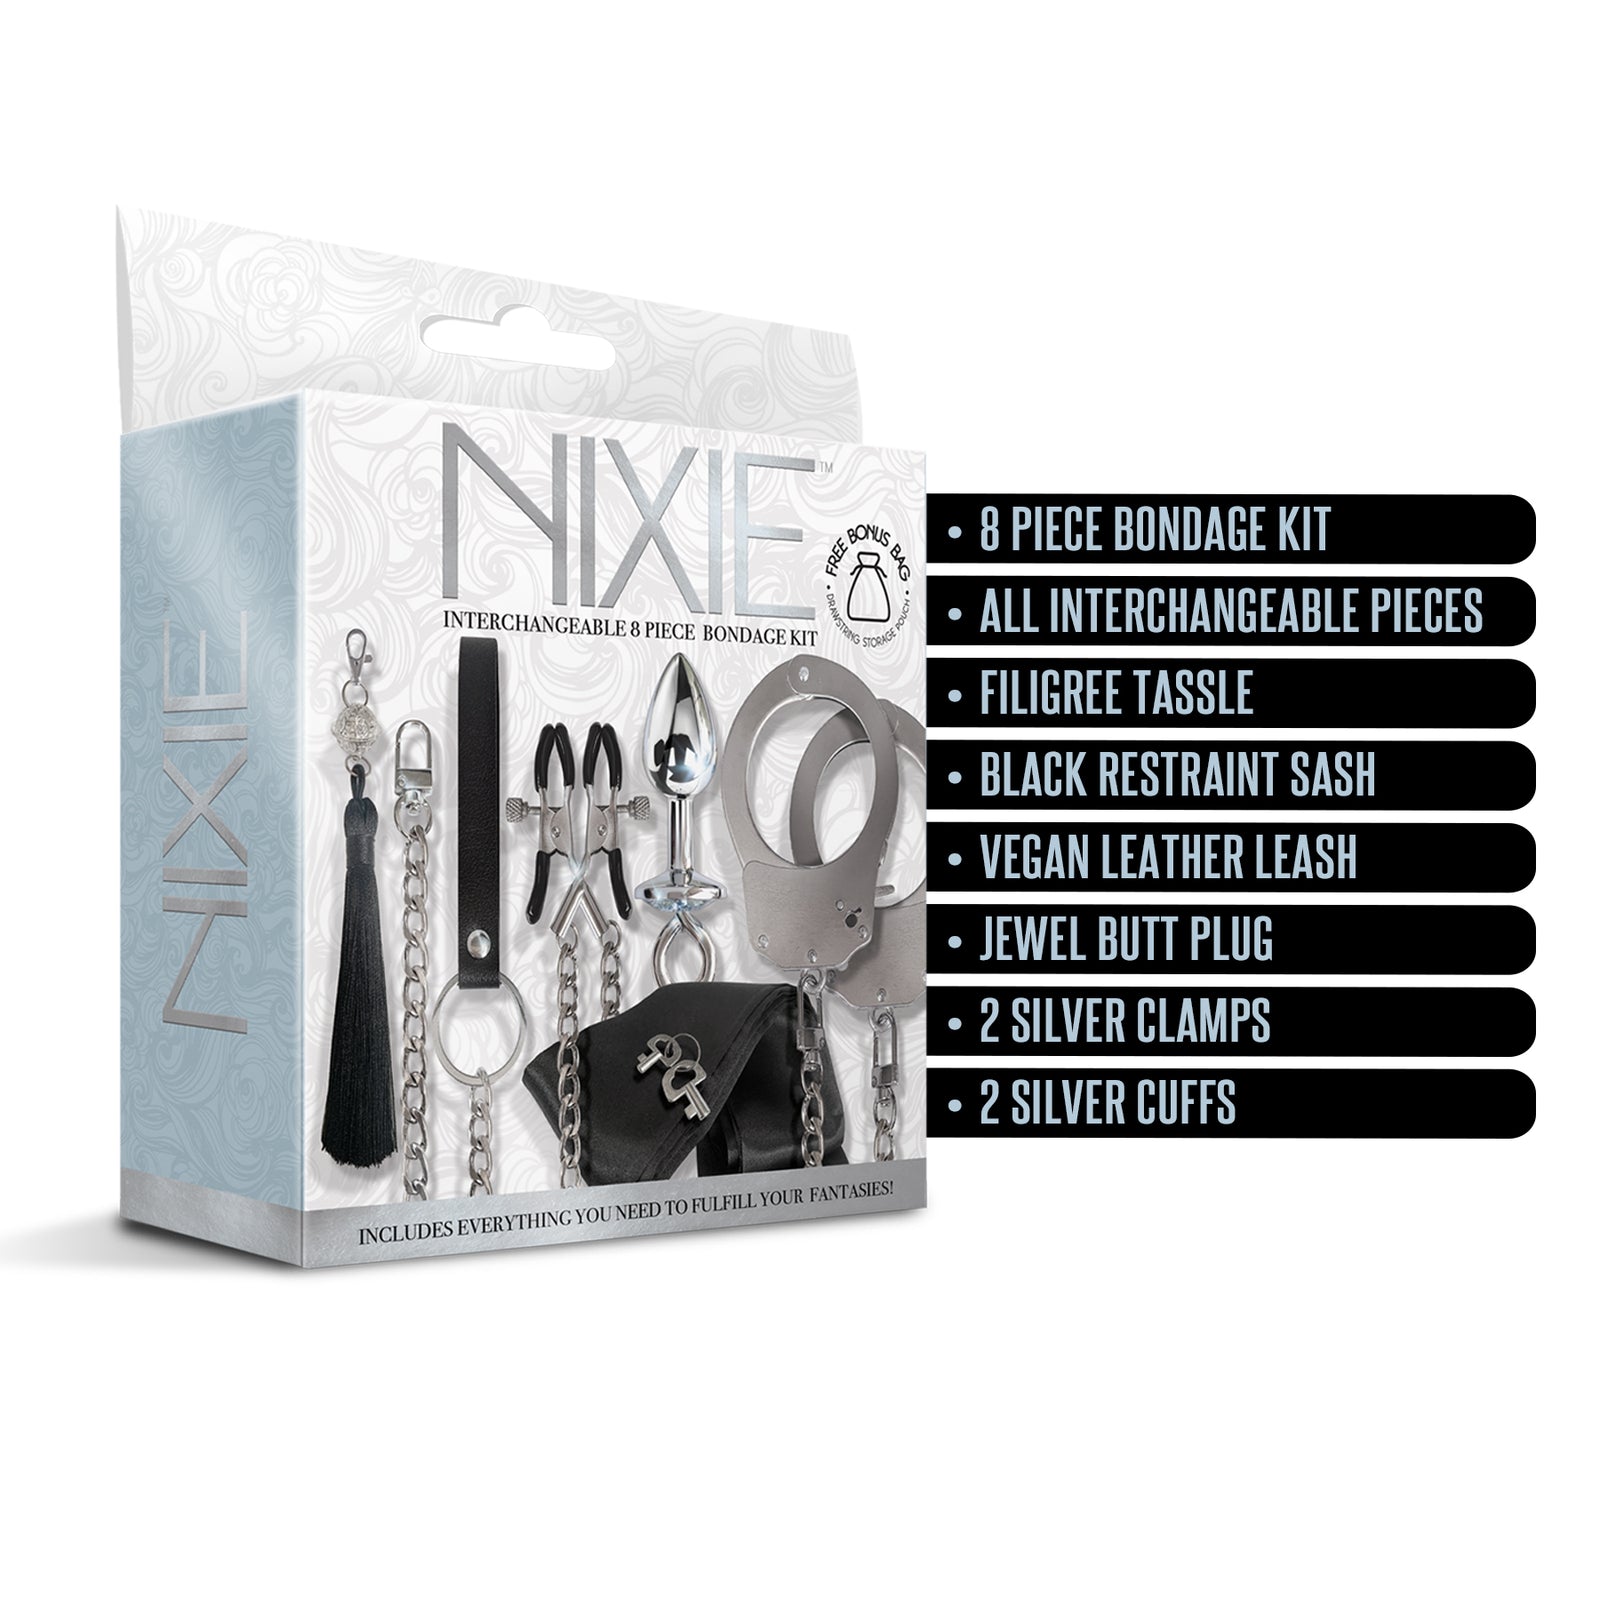 NIXIE Interchangeable 8 Piece Bondage Kit, Silver - THES